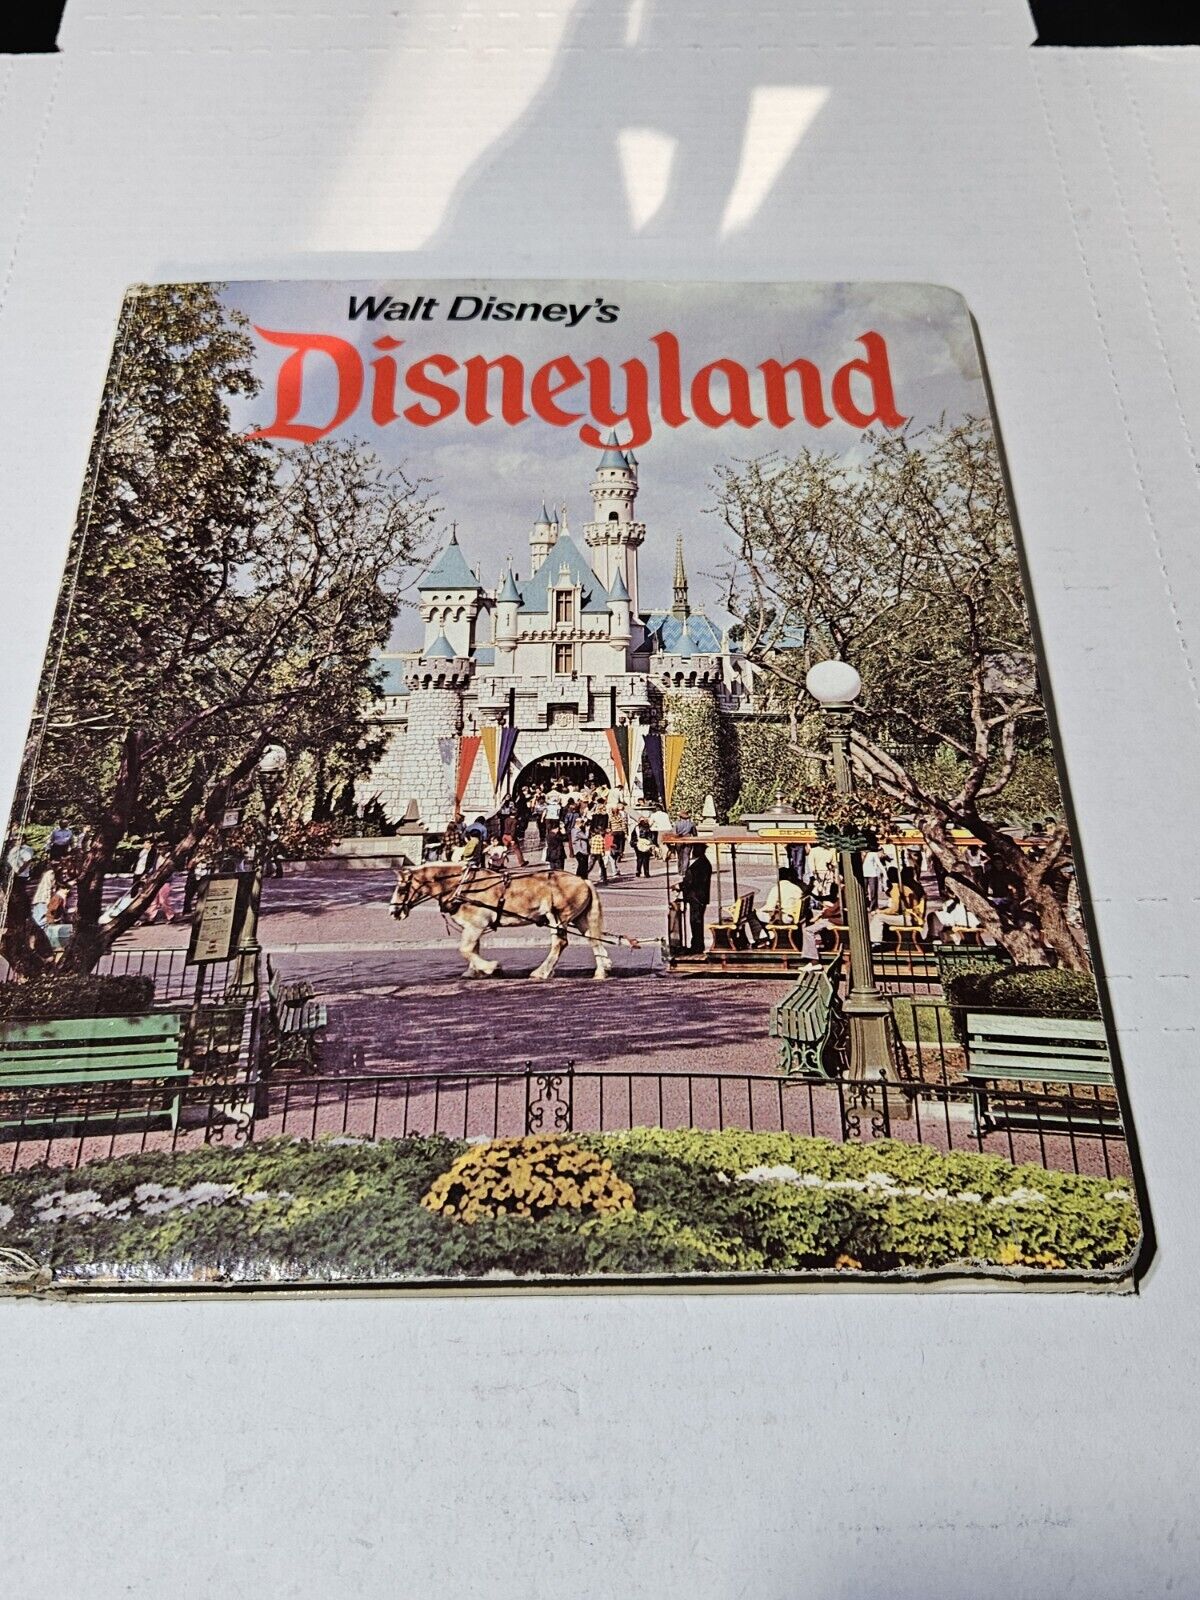 Vintage 1969 Disneyland Walt Disney Hardcover Souvenir Book by Martin A. Sklar